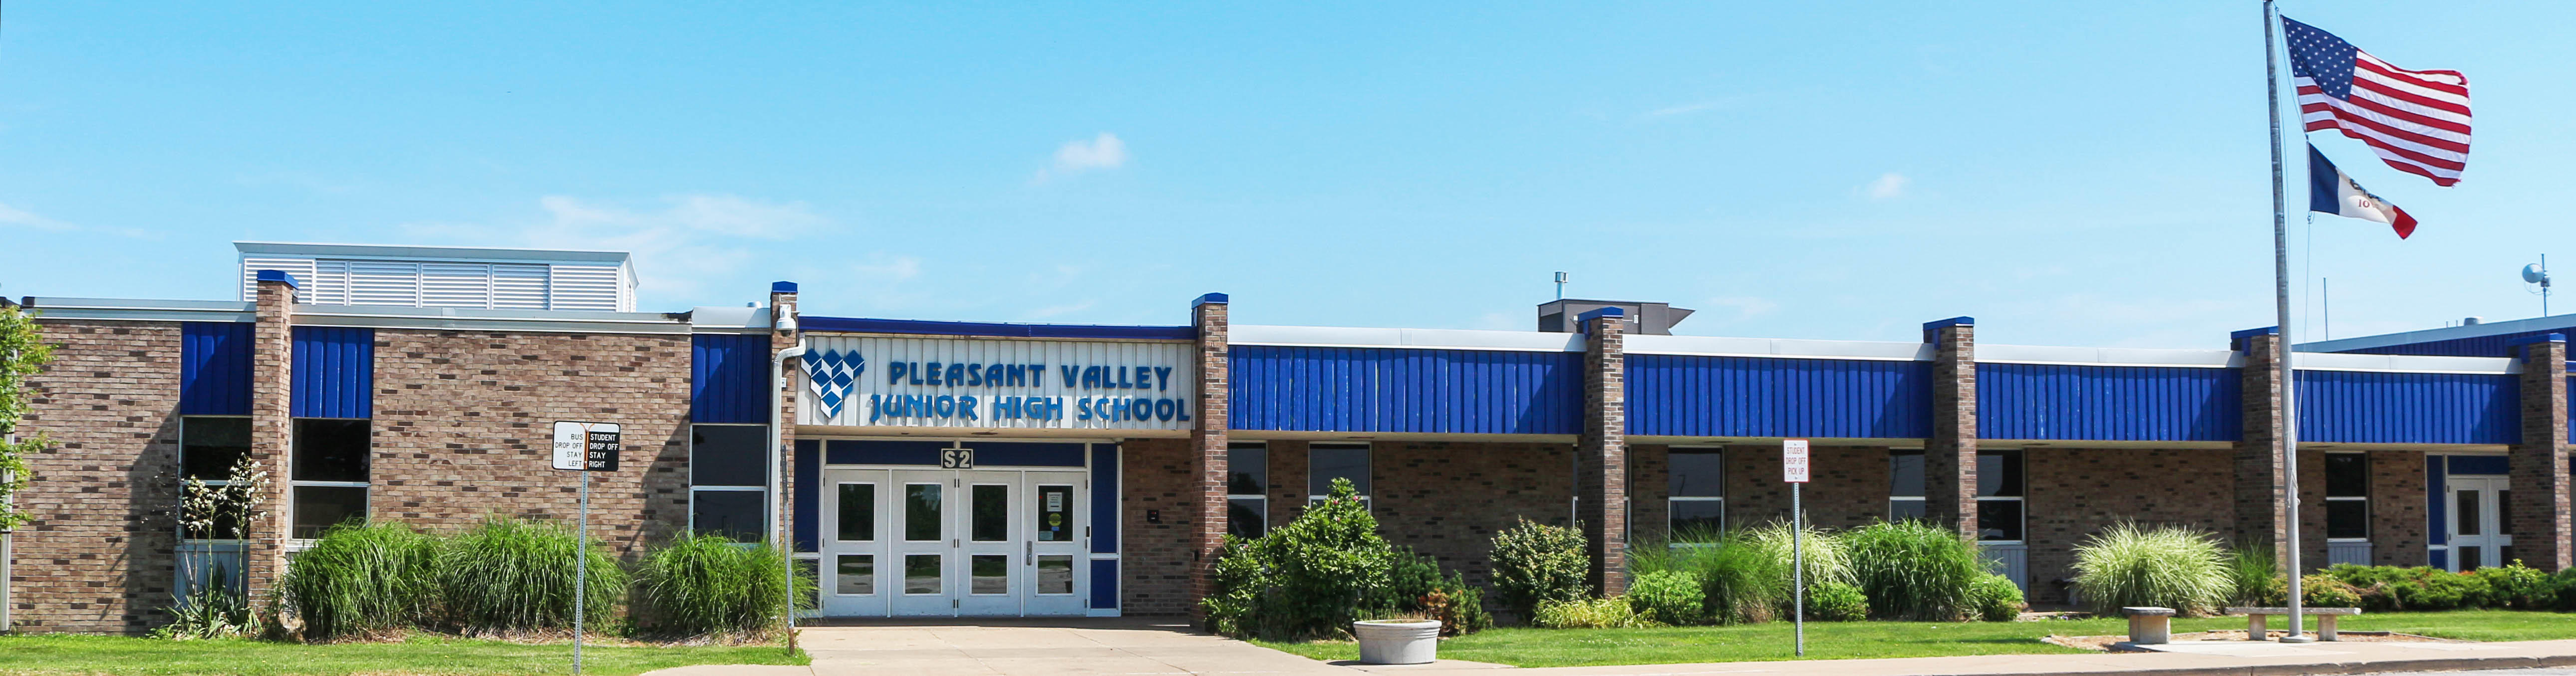 Pleasant Valley Junior High